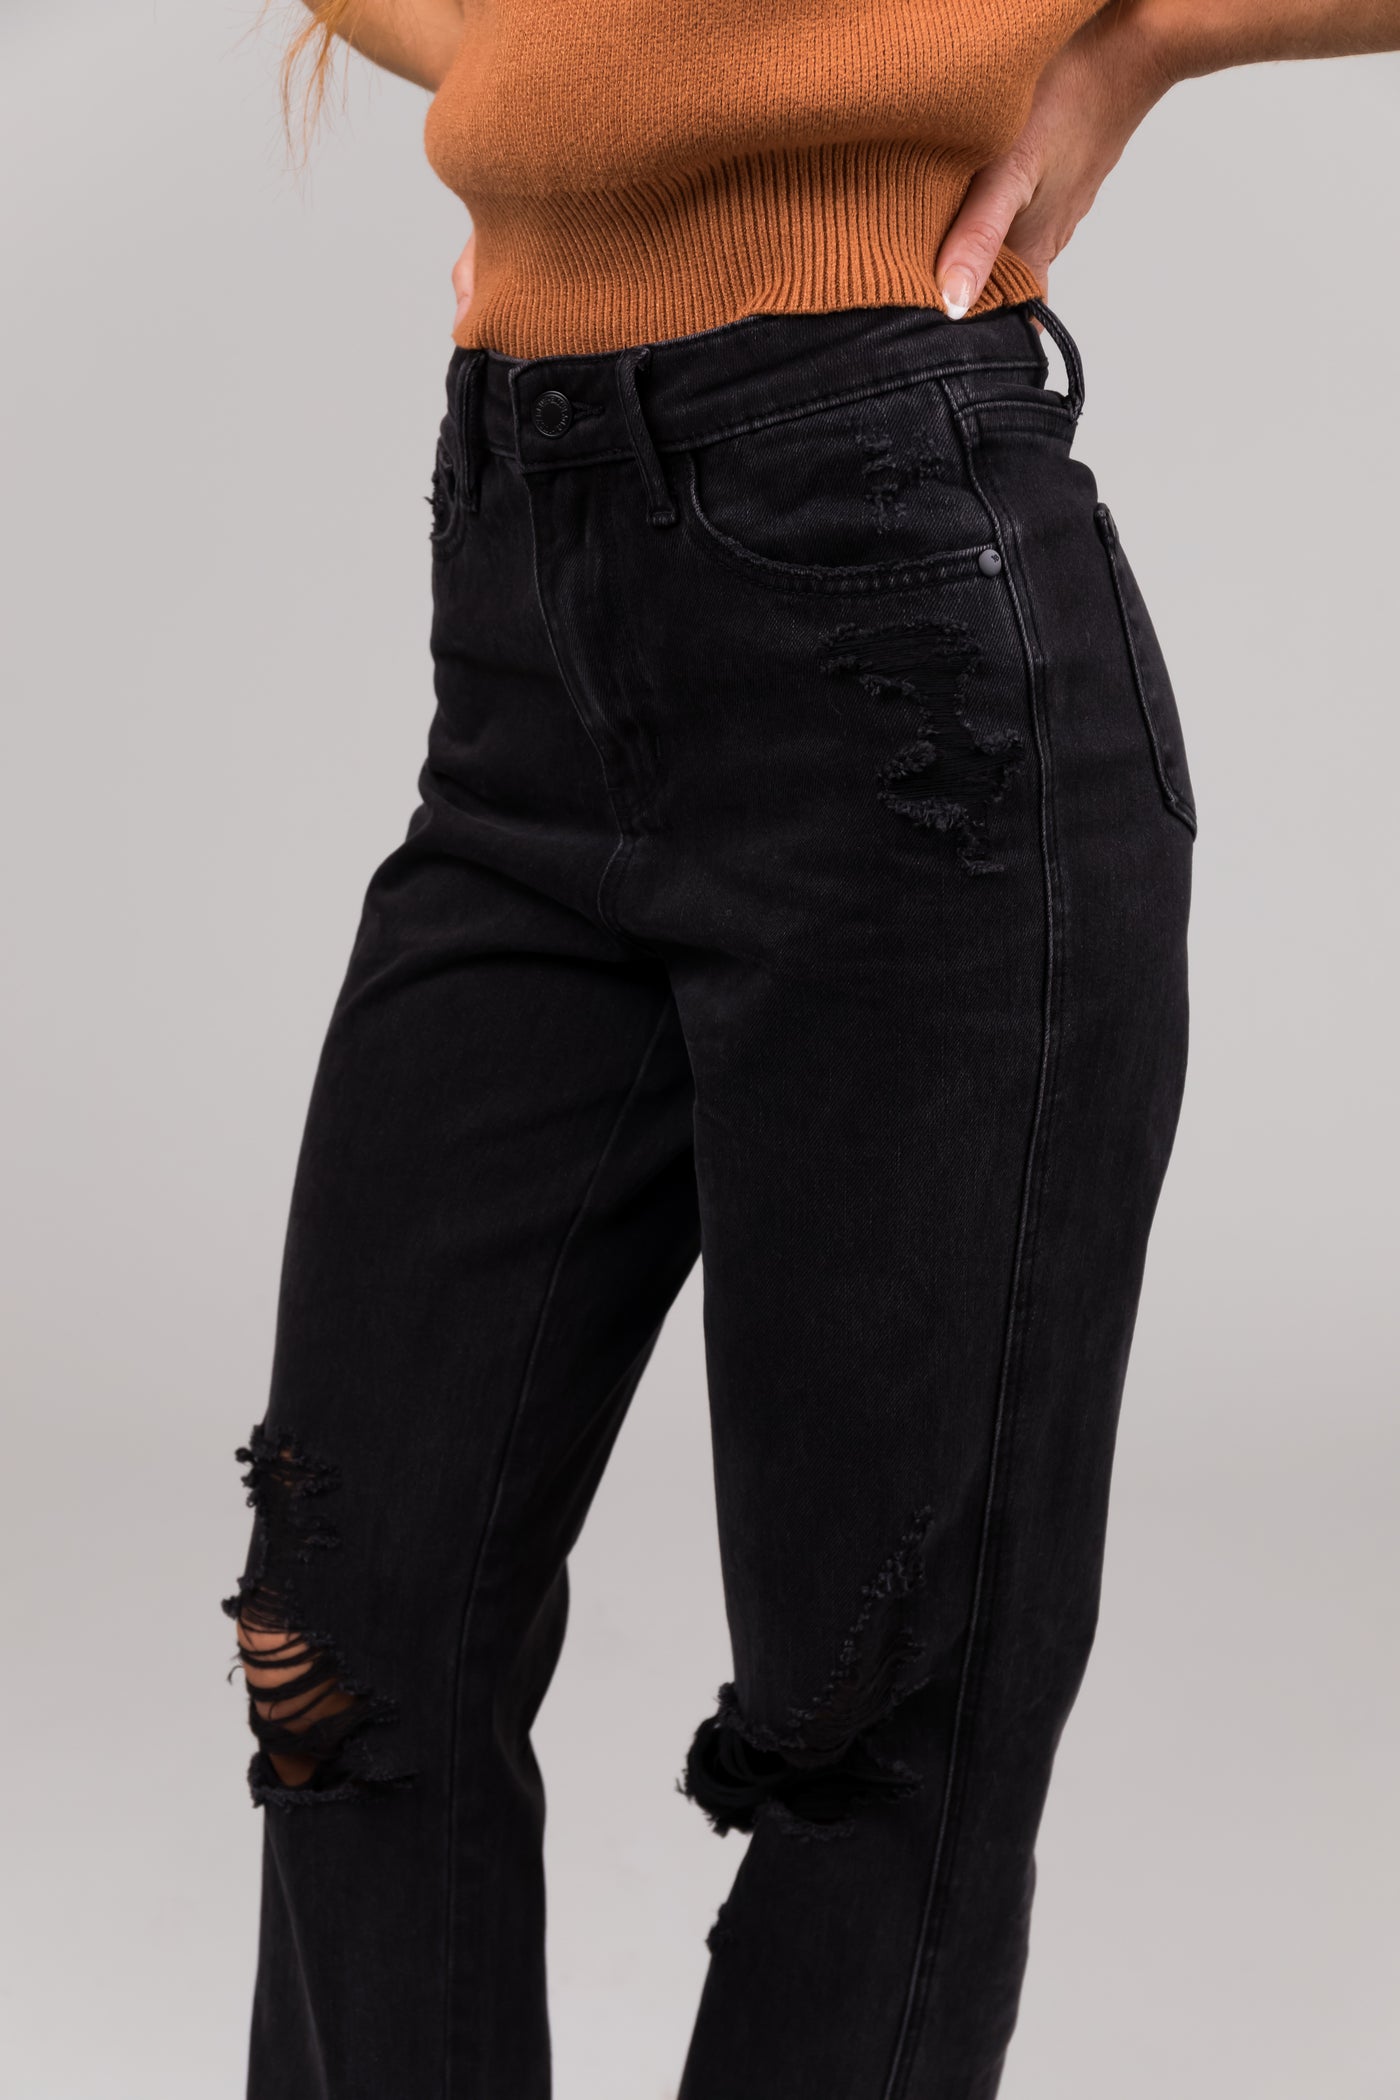 Judy Blue Black 90's Distressed Straight Jeans